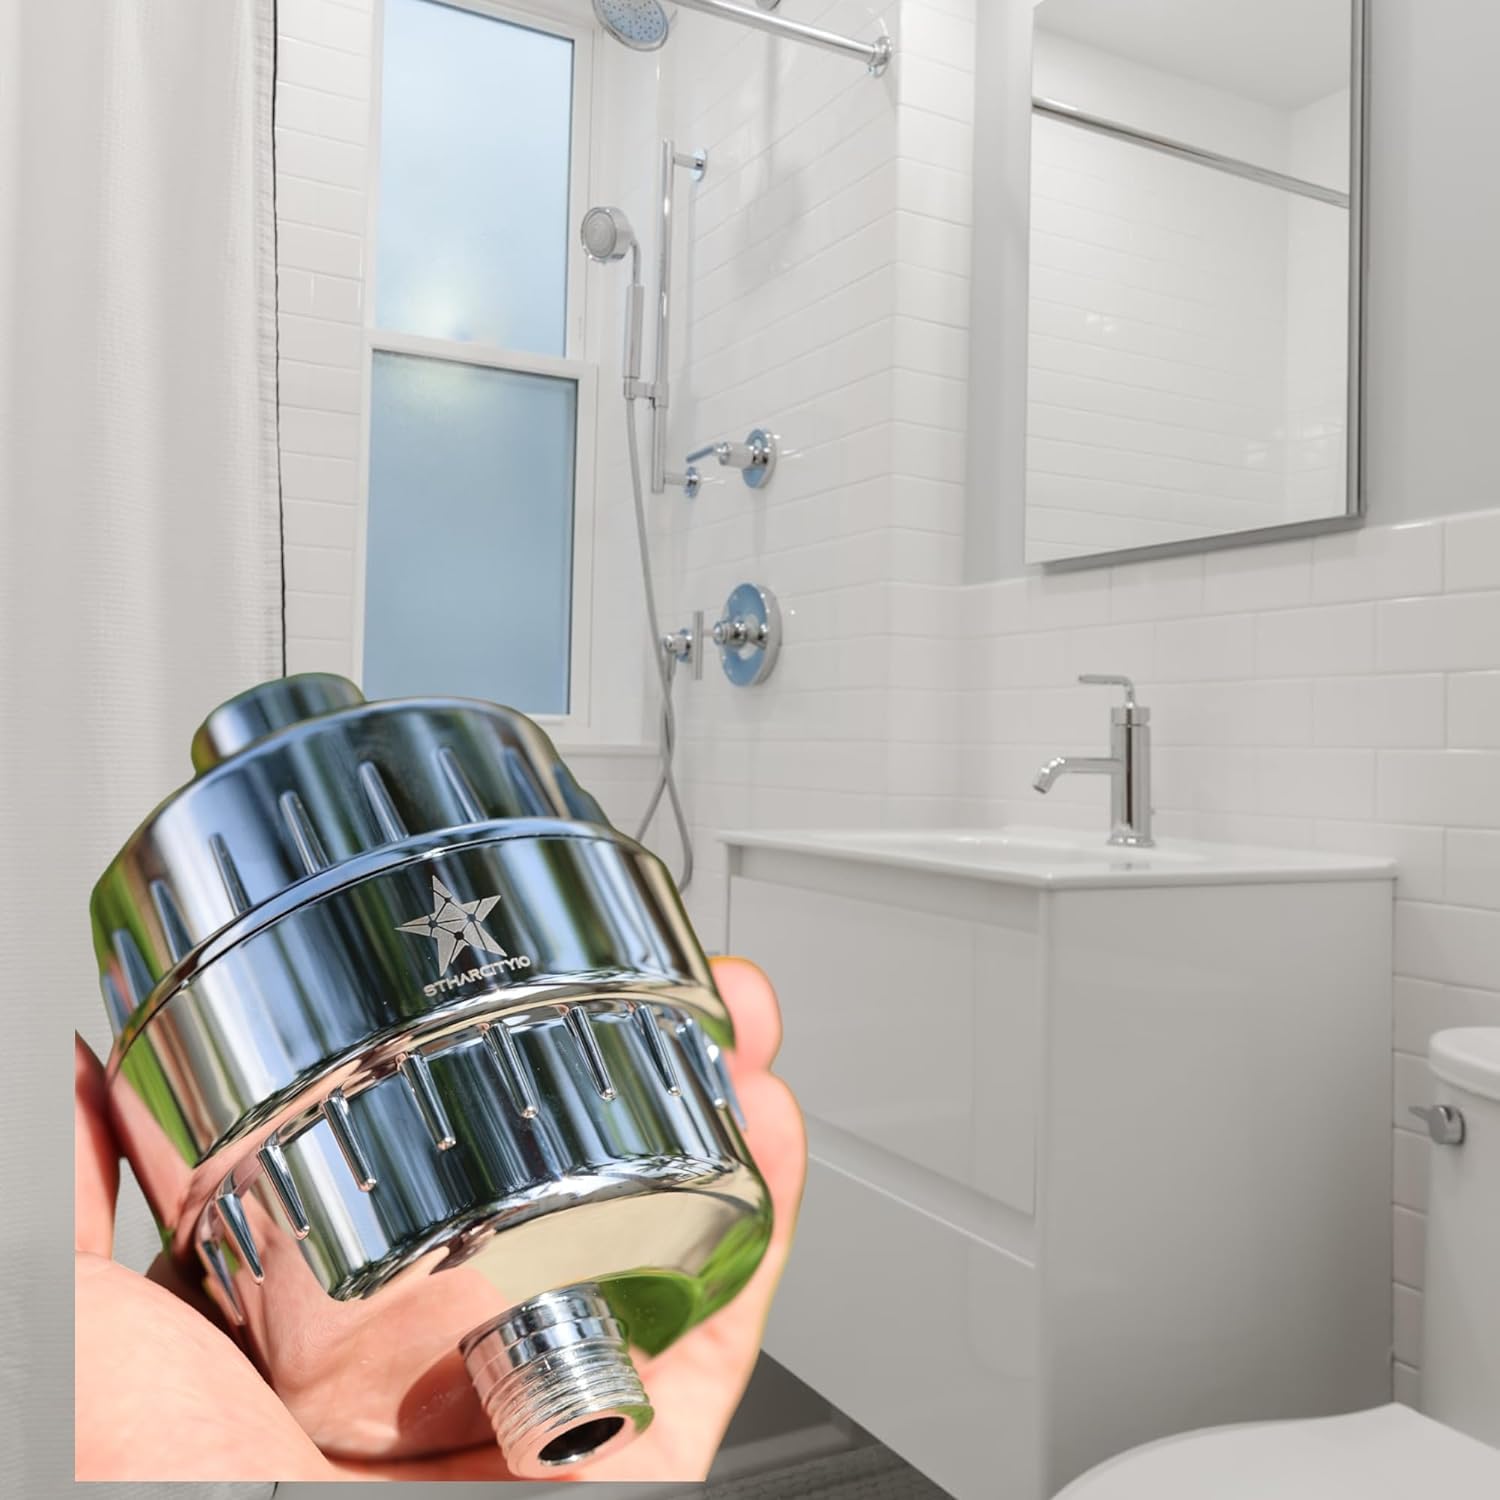 STHARCITYio - Shower Head Filter, Filtered Shower Head, High Performance Revitalizing Shower Filter - Remove Chlorine, Fluoruro - Shower Filter Head for Hard Water - Remove Dry Skin, Dandruff